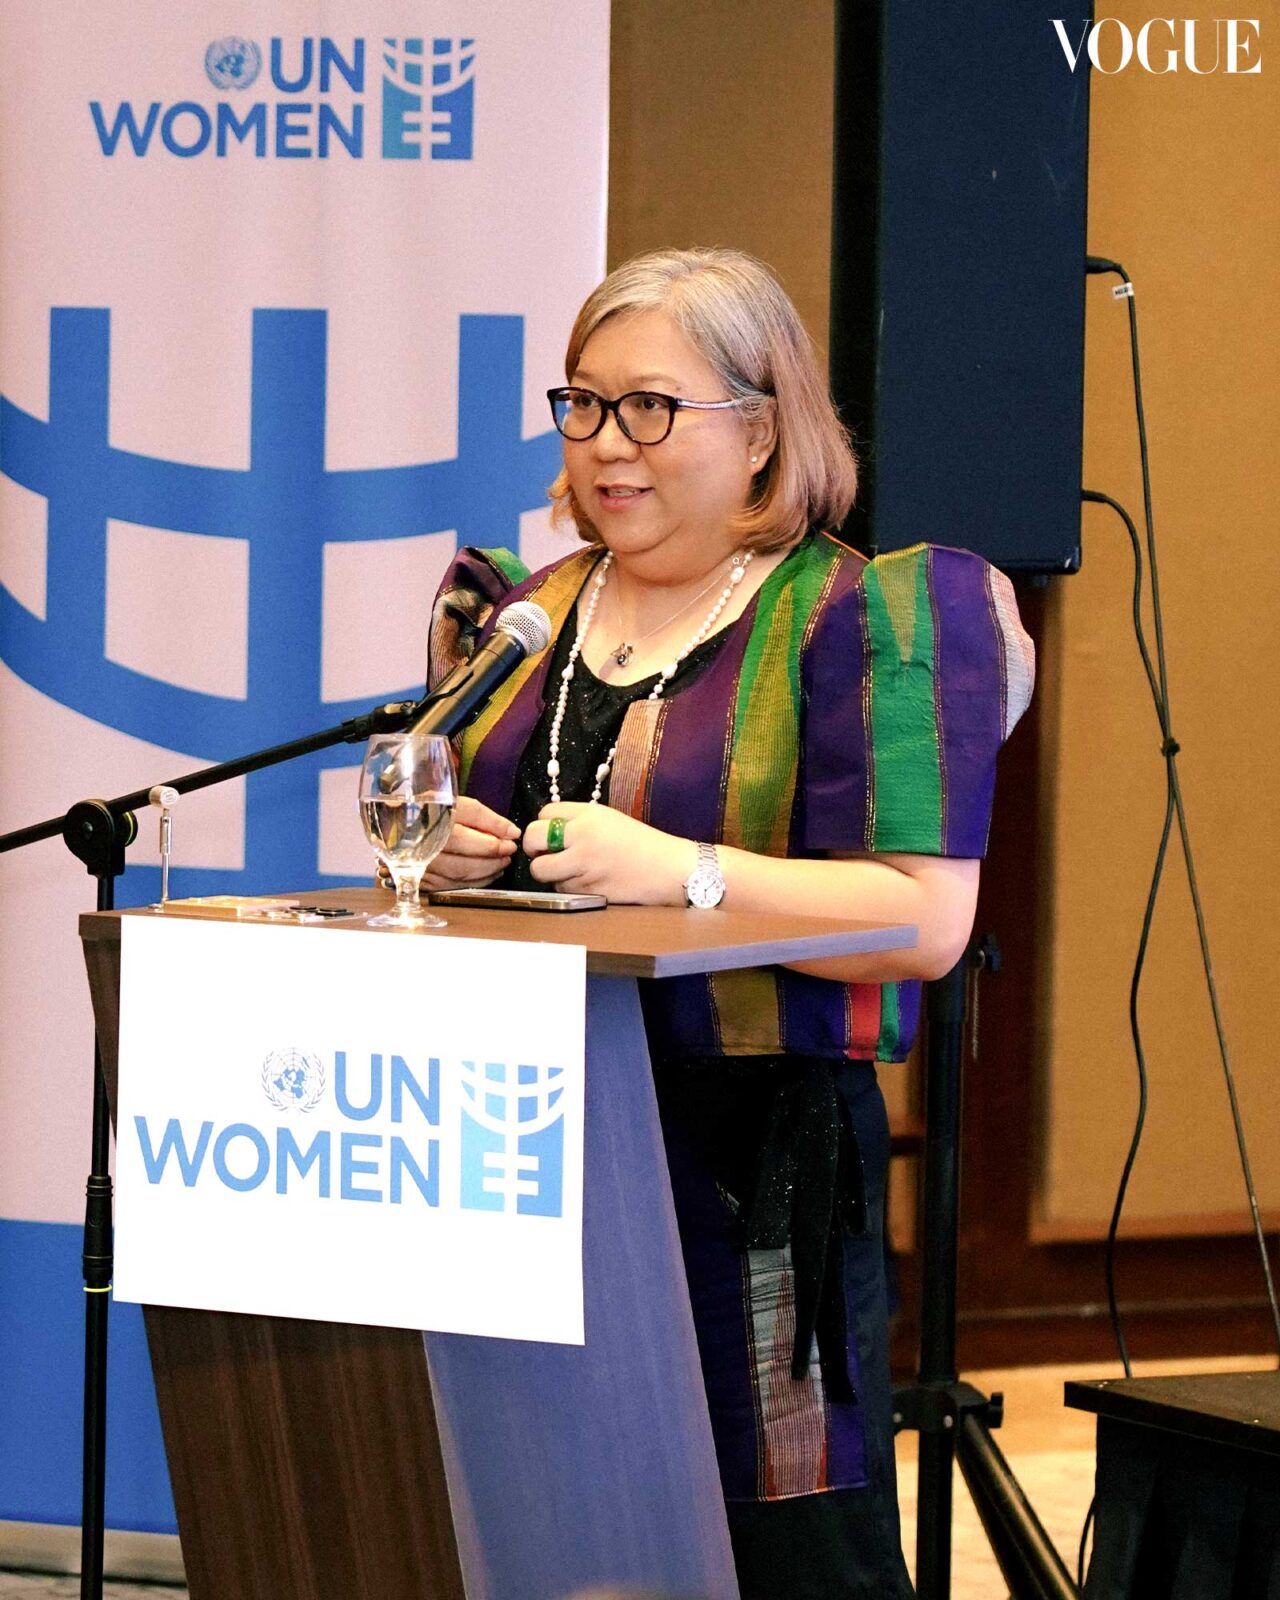 UN Women Philippines country coordinator Rosalyn Mesina